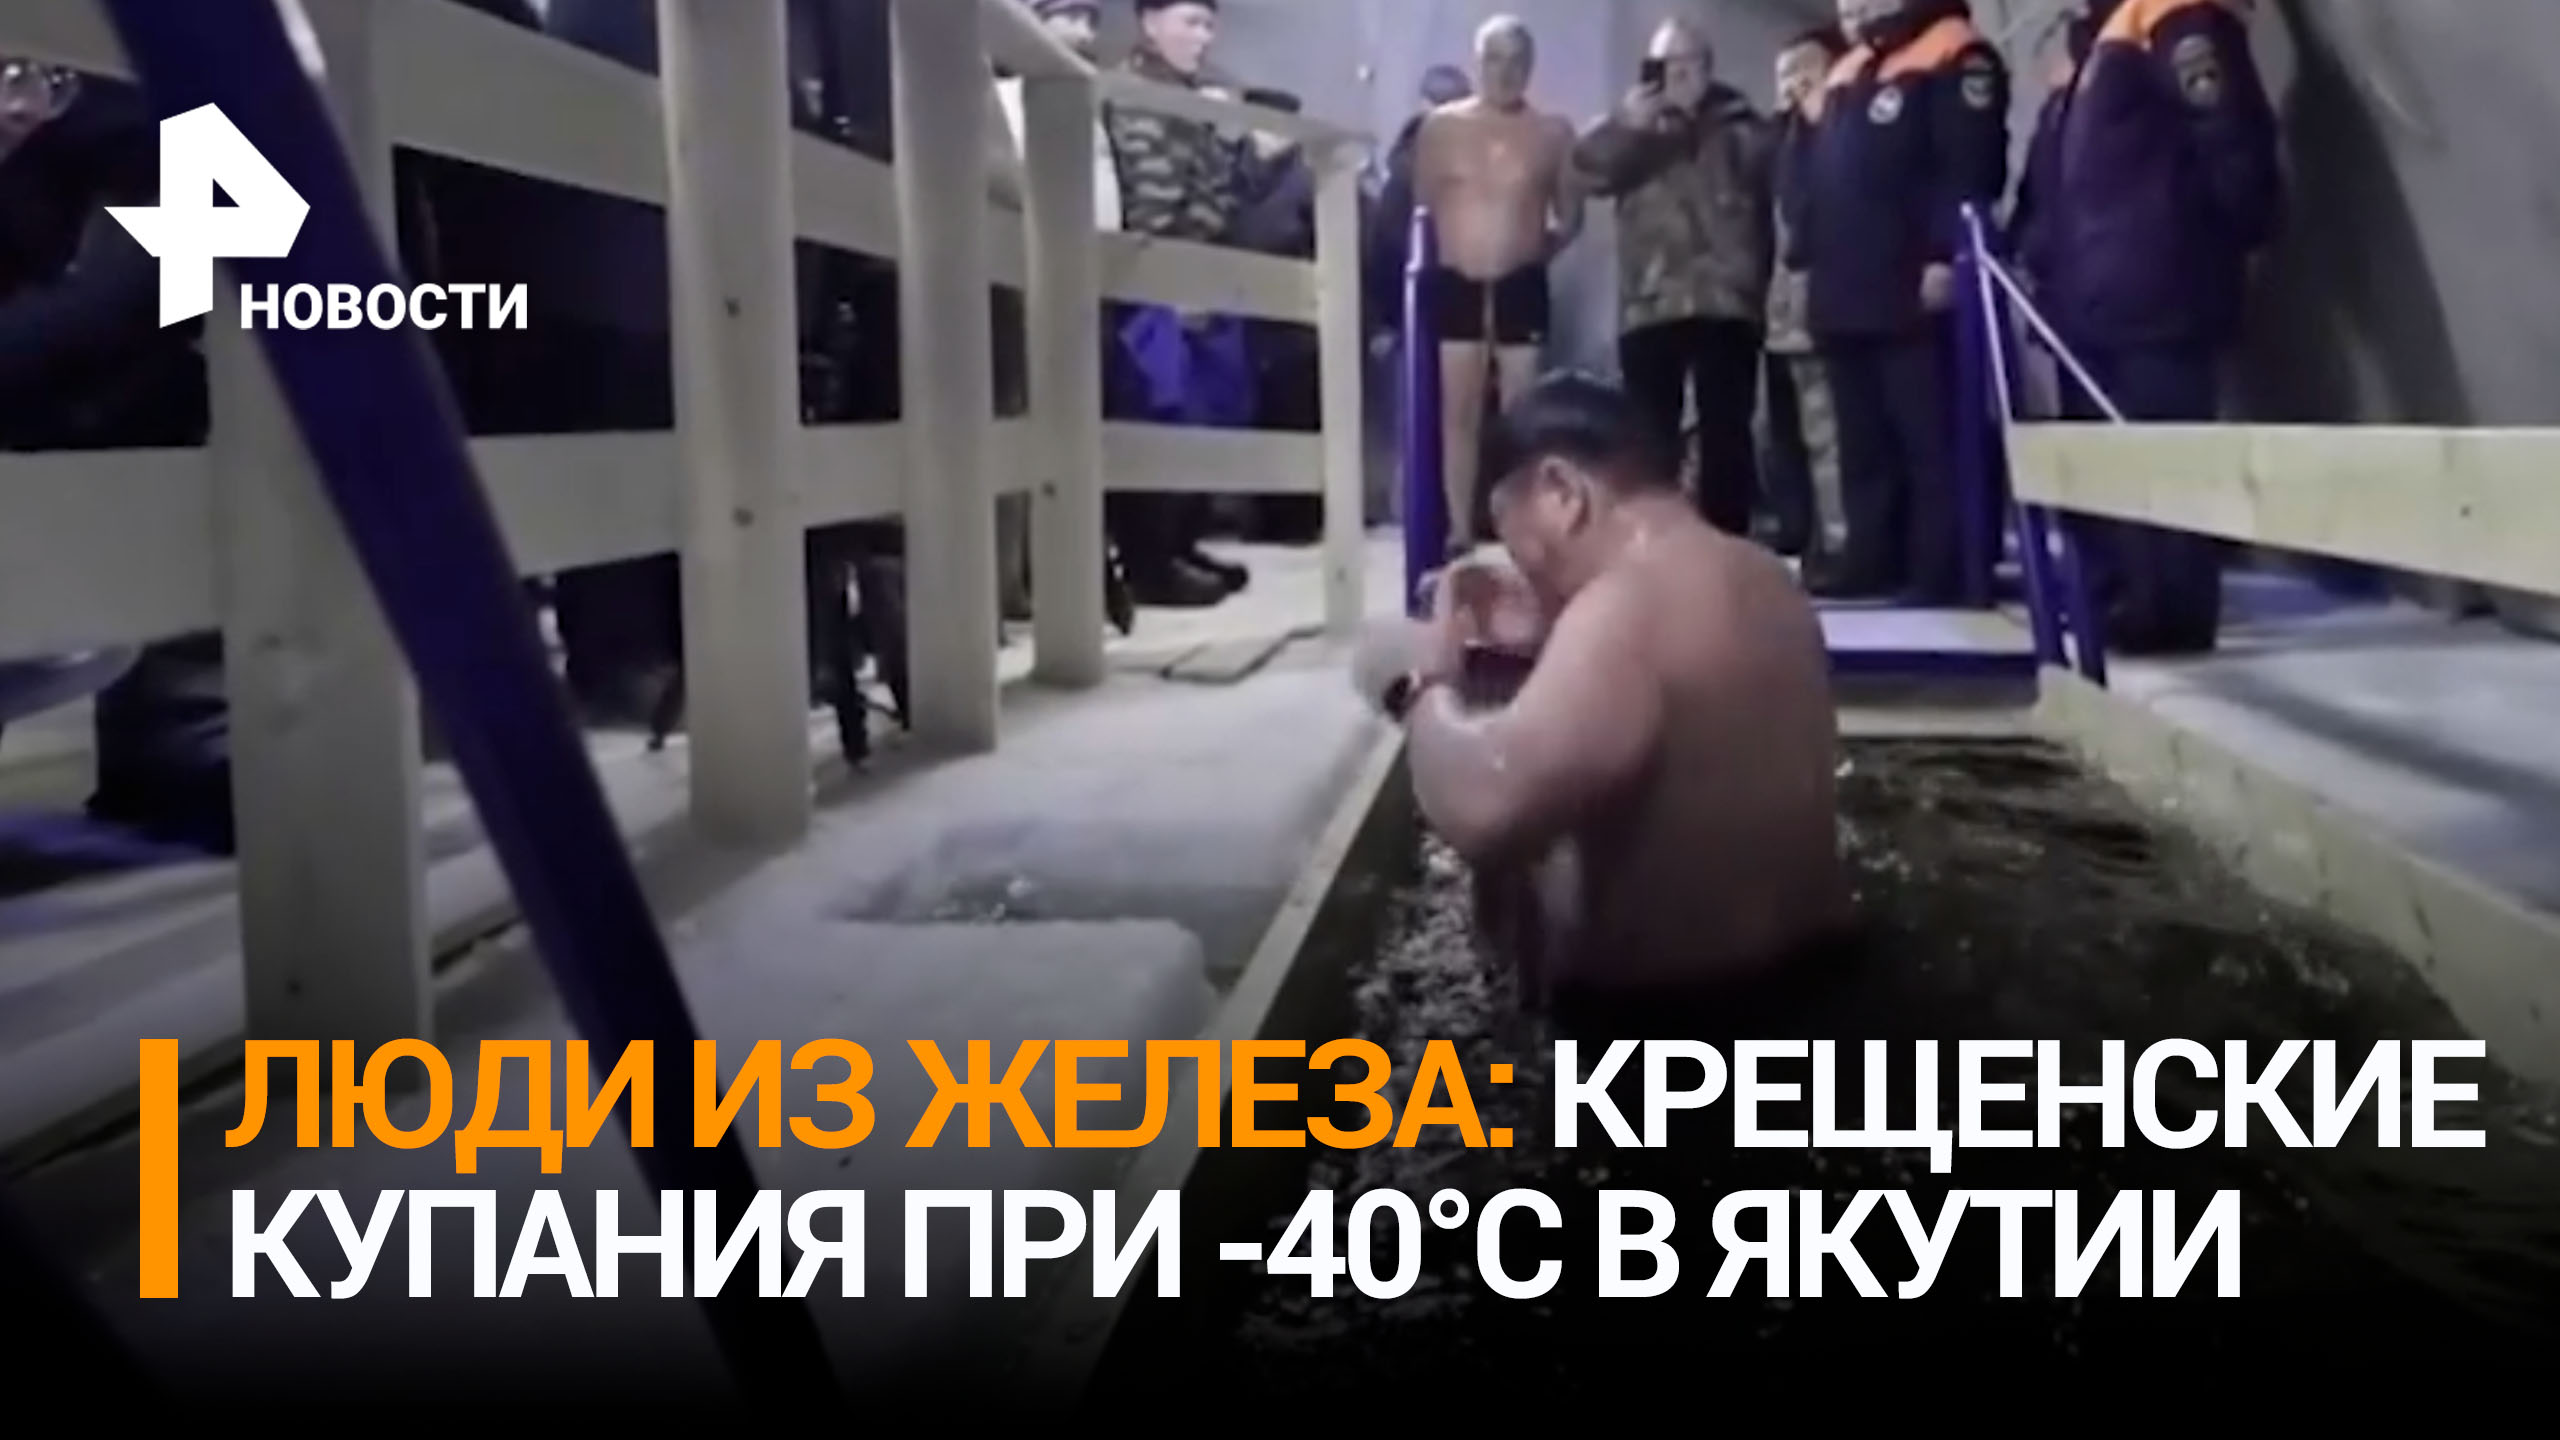 В Якутии провели крещенские купания - при минус 40 градусах Цельсия! / РЕН Новости